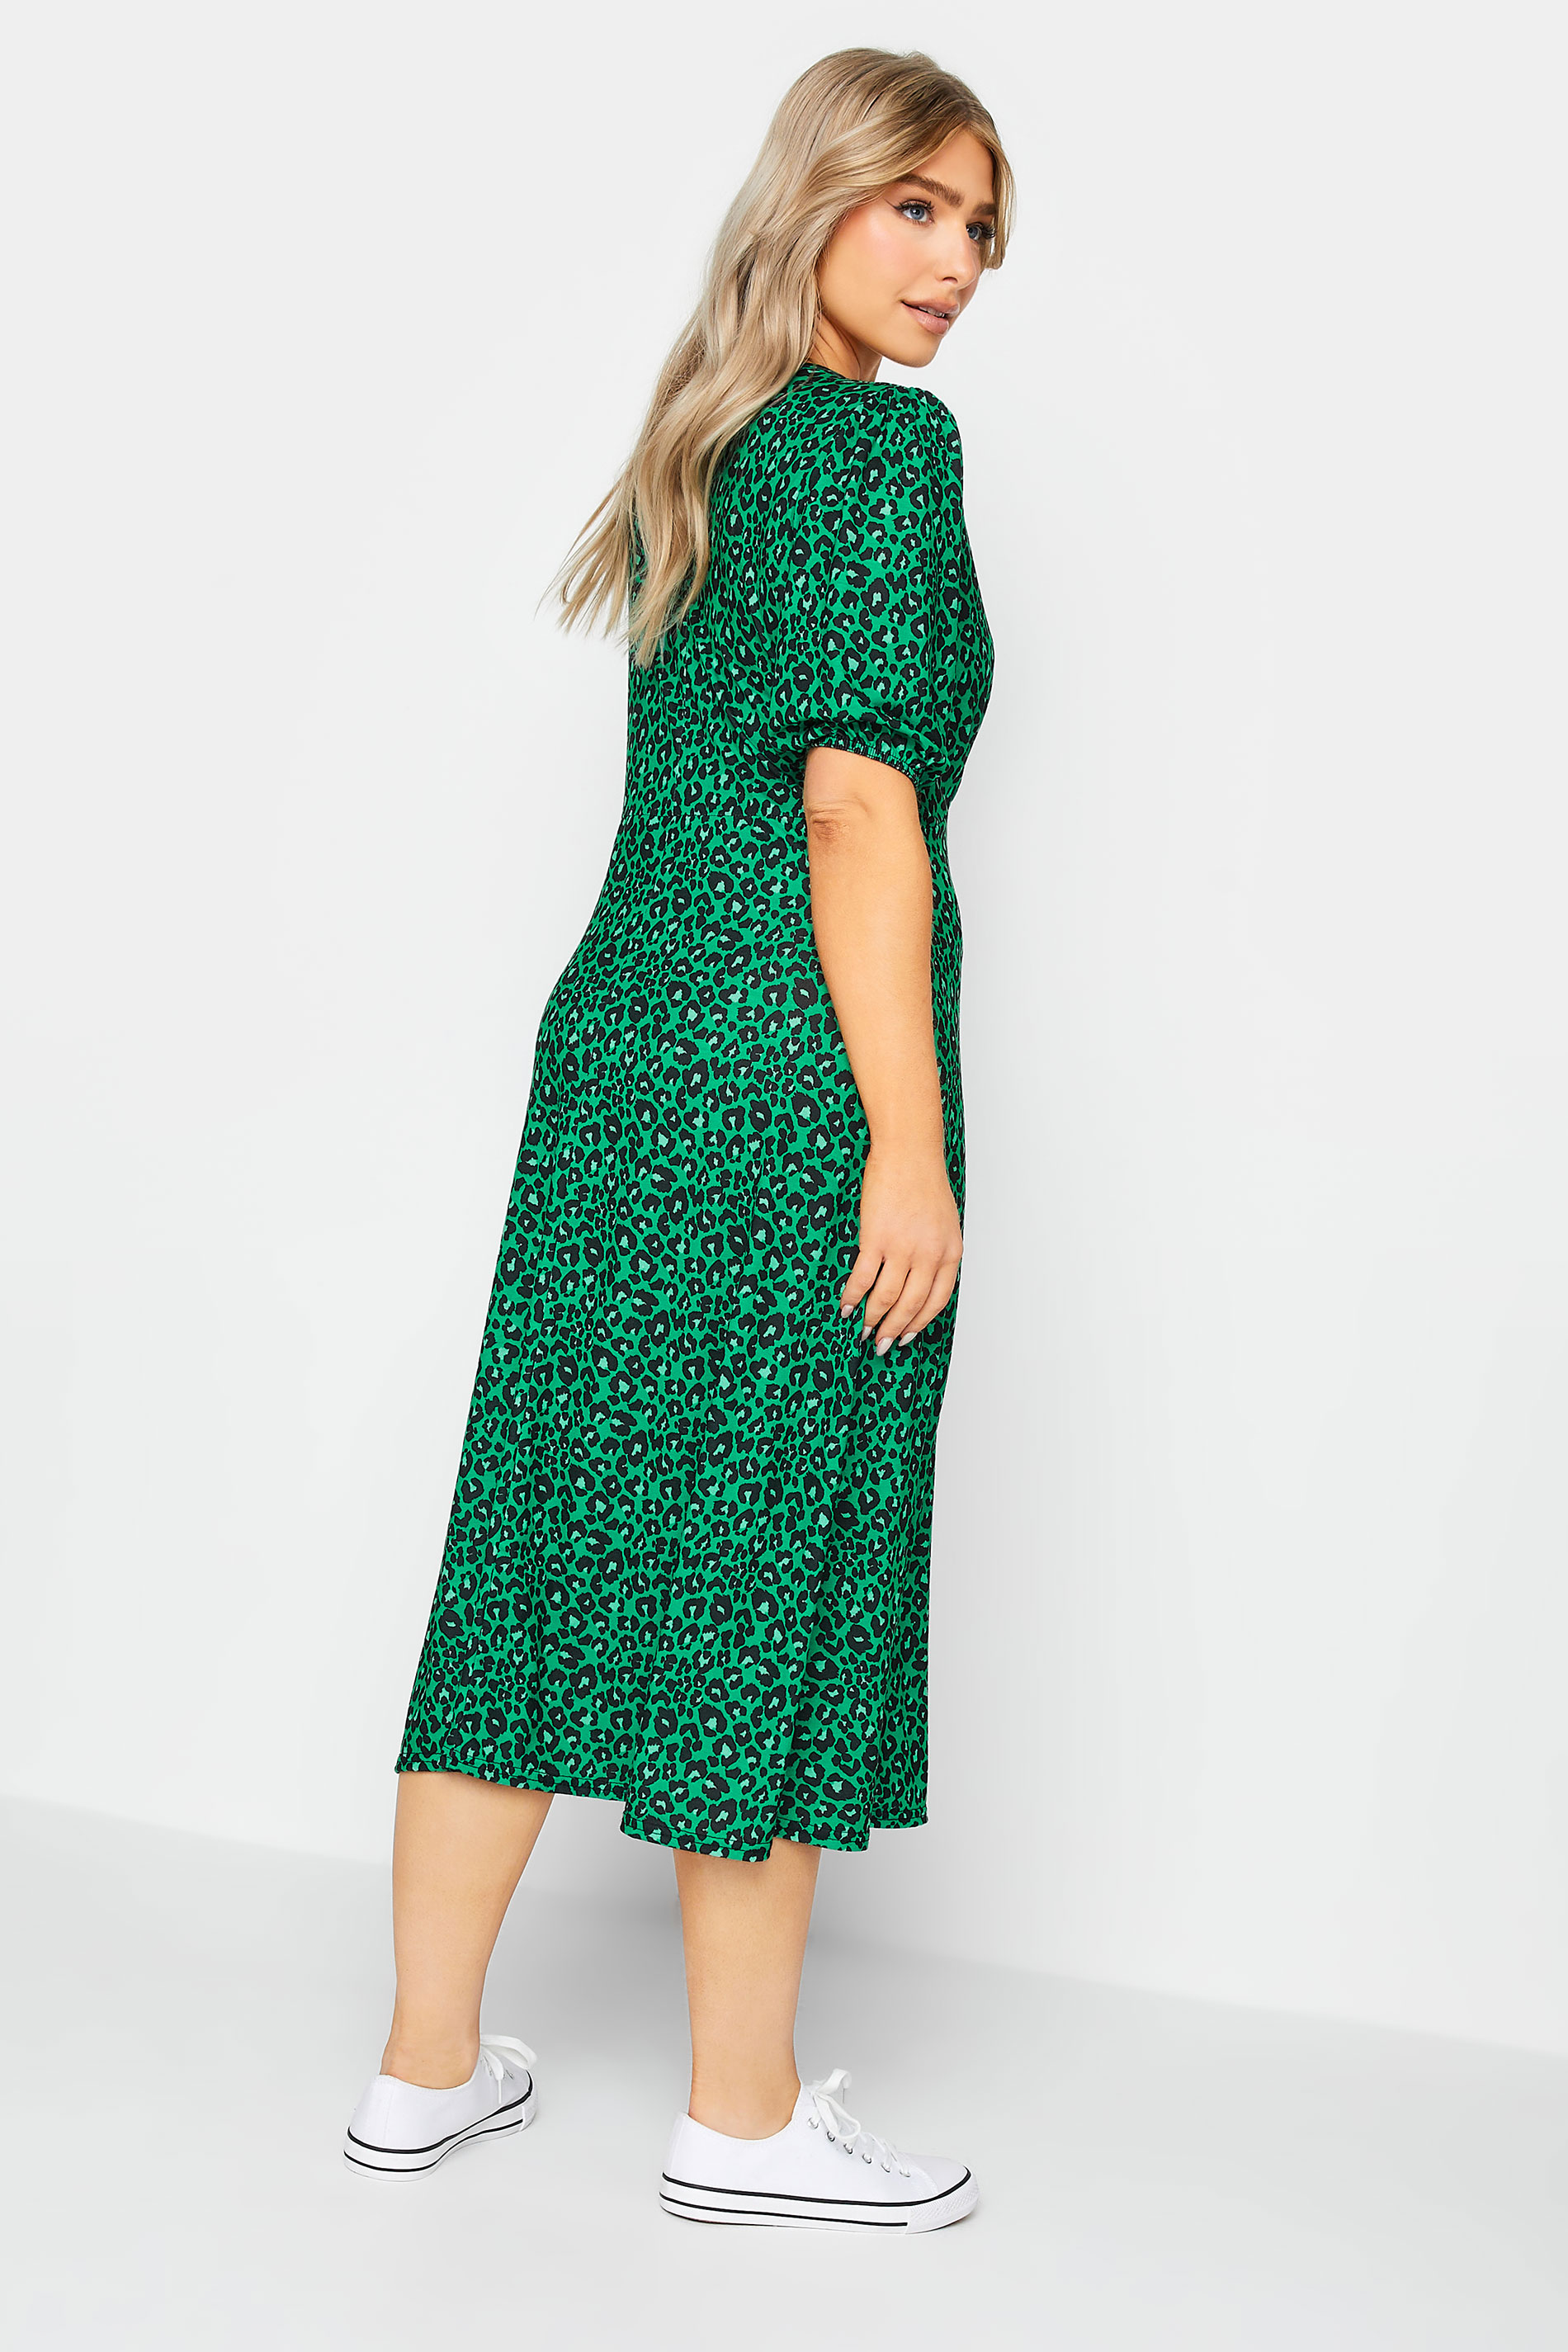 M&Co Green Leopard Print Dress | M&Co 3